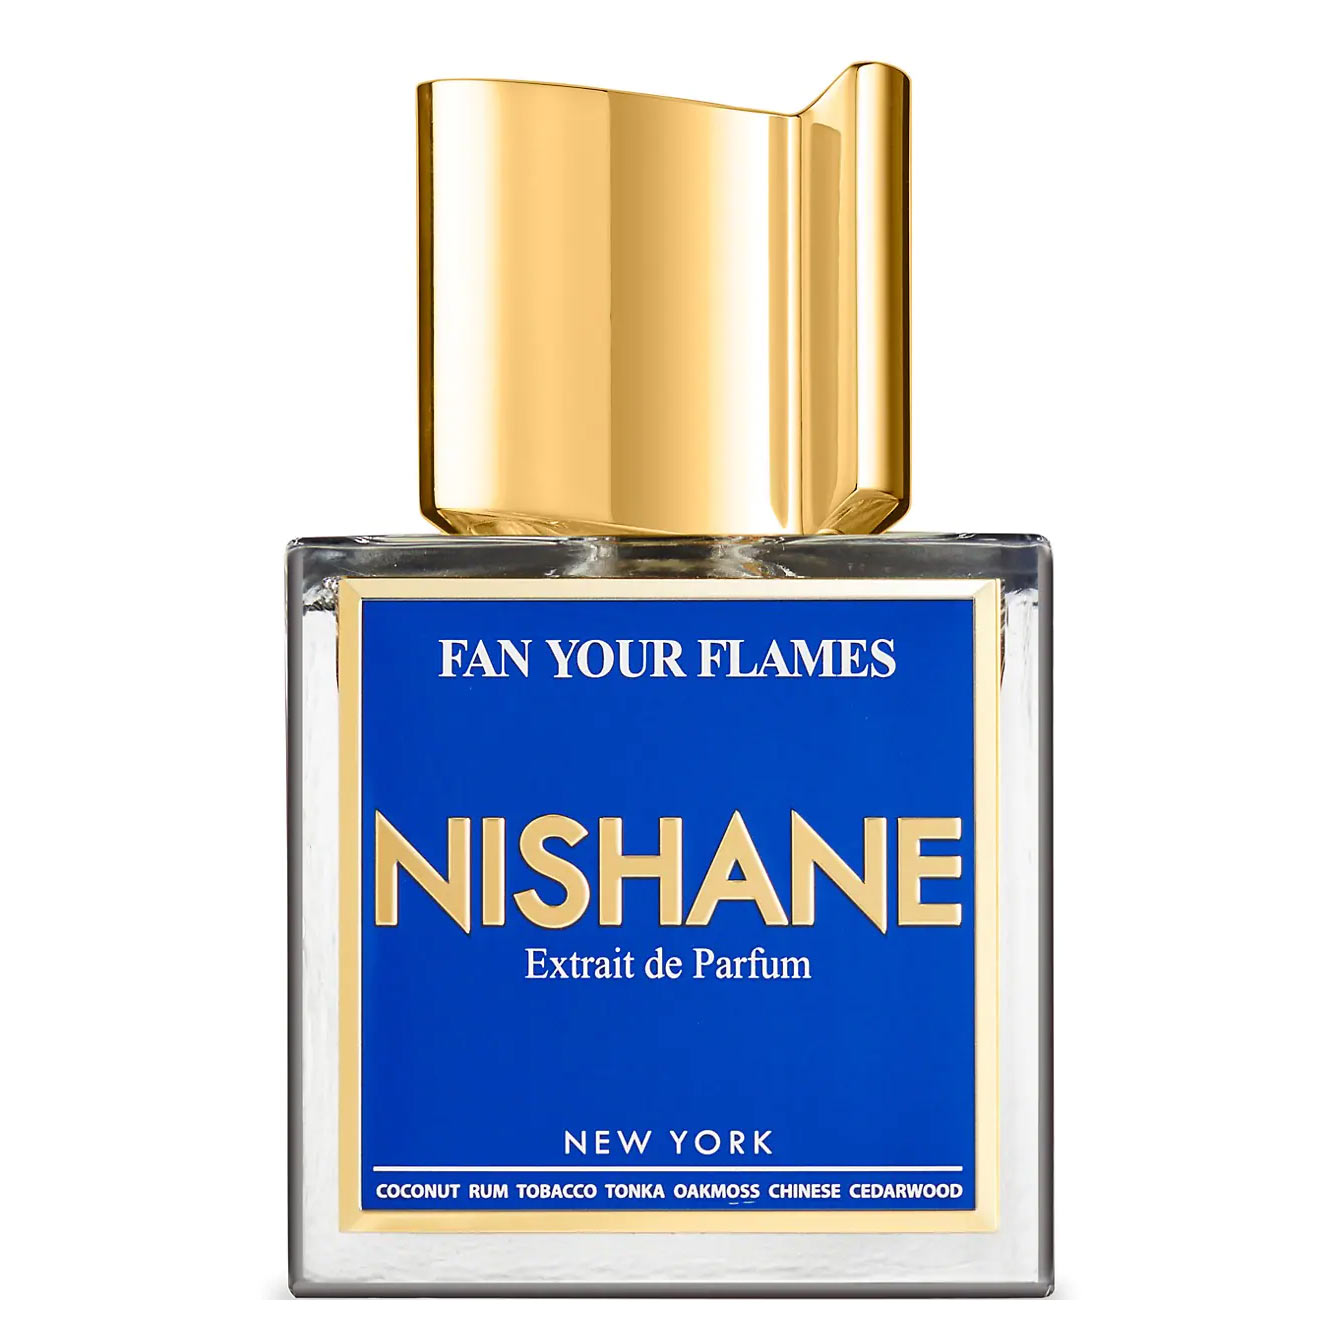 Fan Your Flames Nishane Image